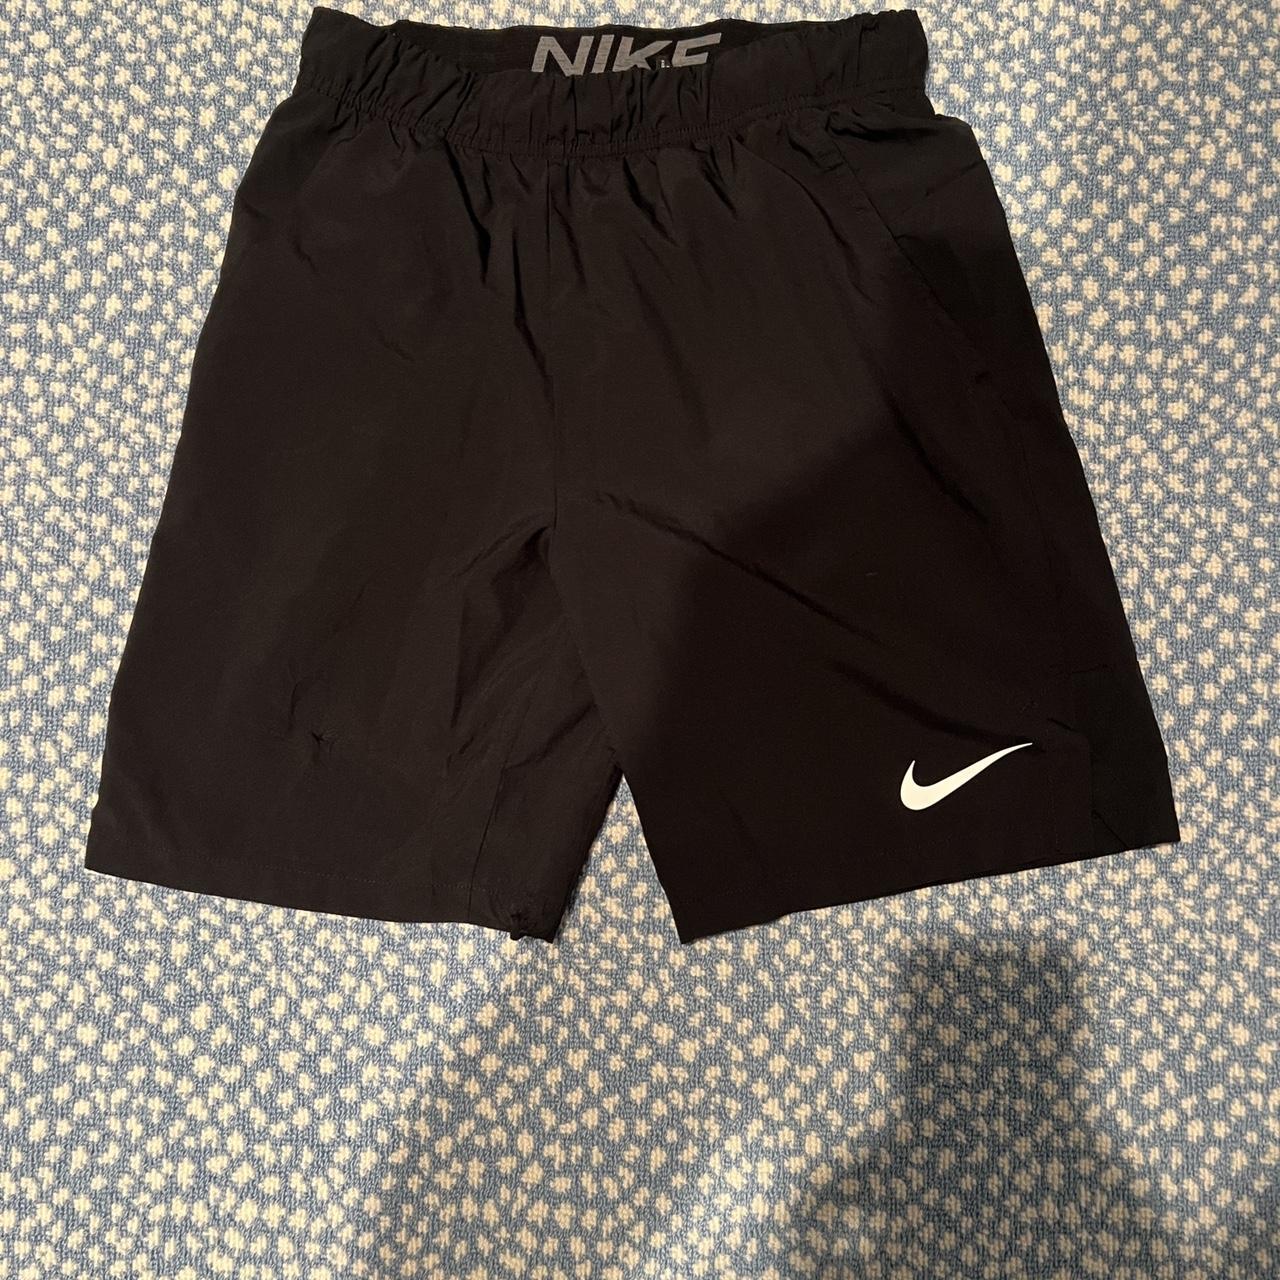 Nike Men's Black Shorts | Depop